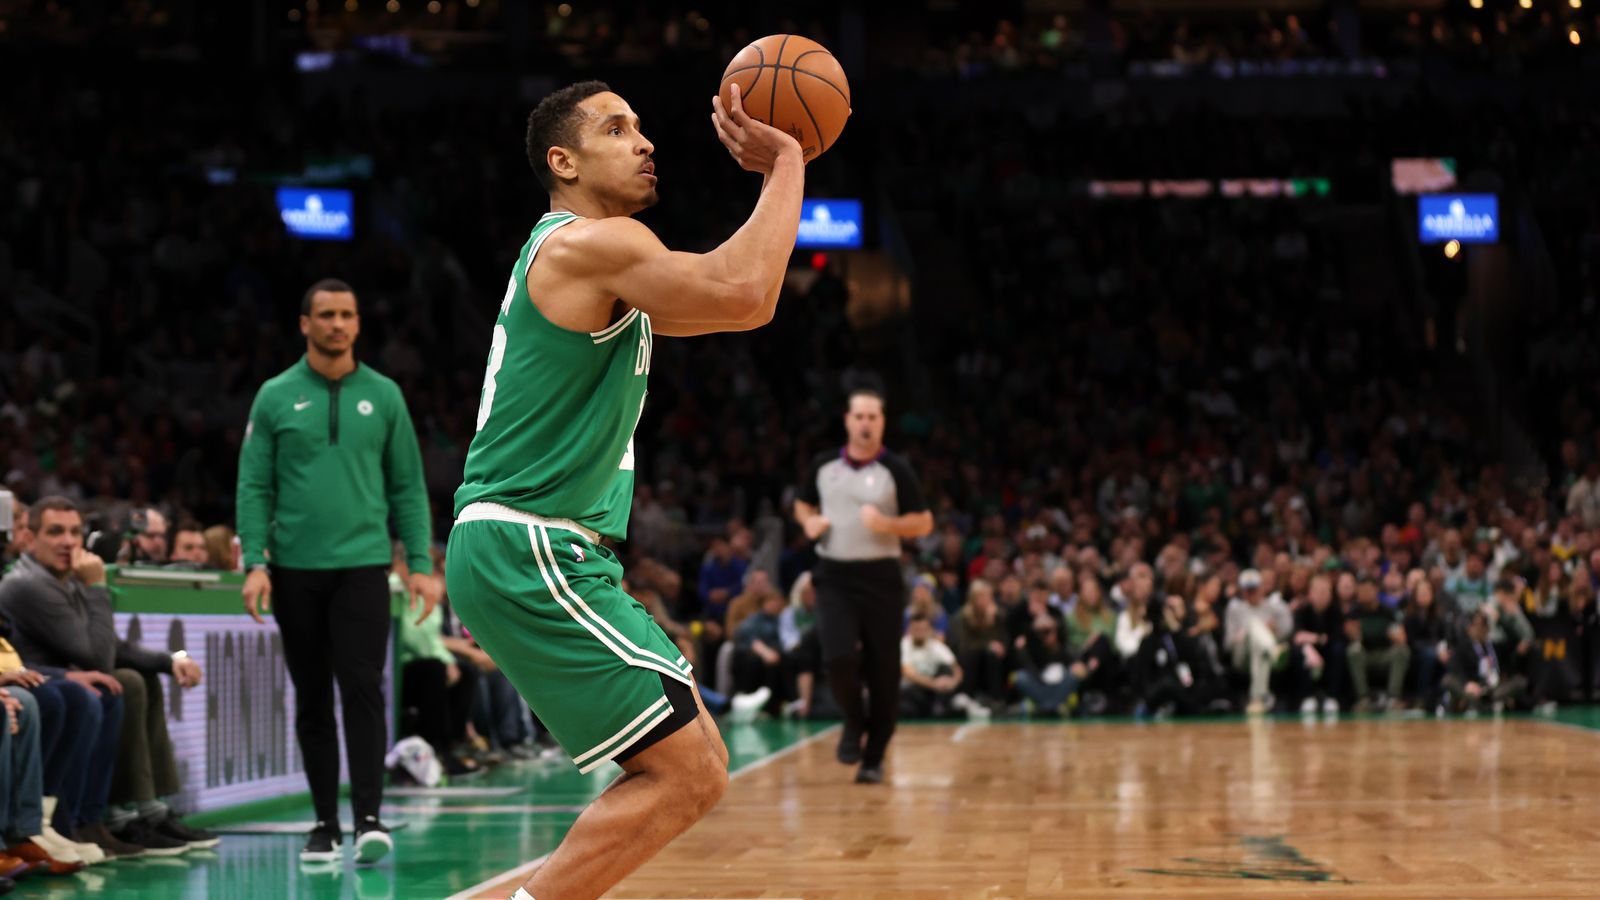 Malcolm Brogdon NBA Playoffs Player Props: Celtics vs. Heat